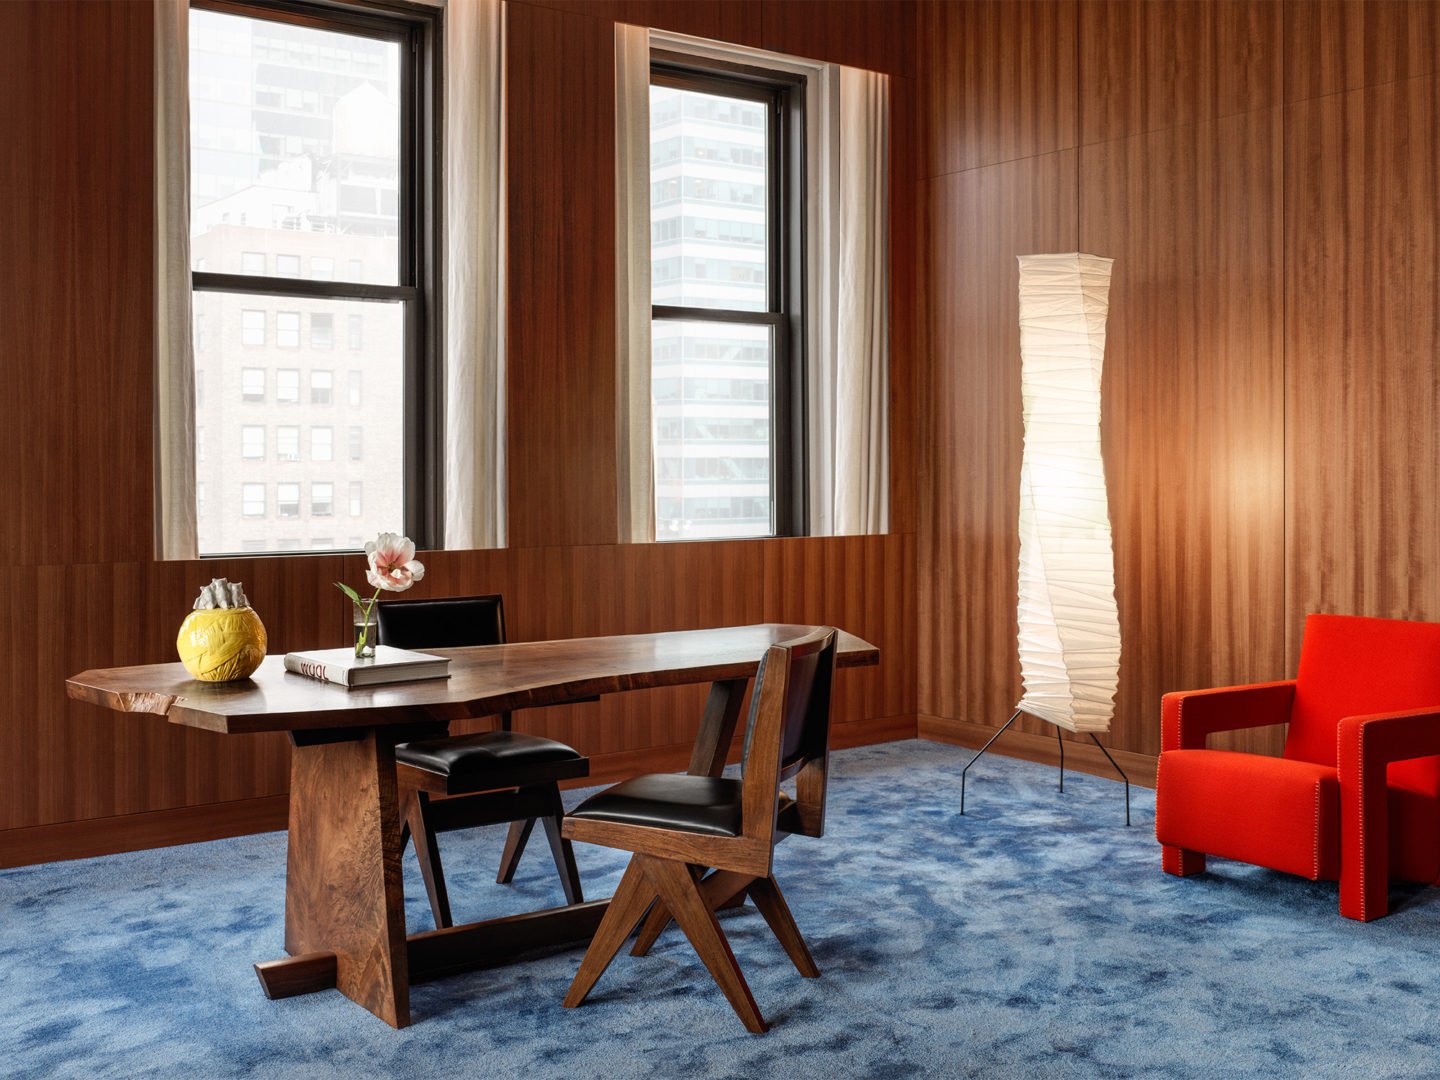 Halleroed designed Calvin Klein's executive suite in New York